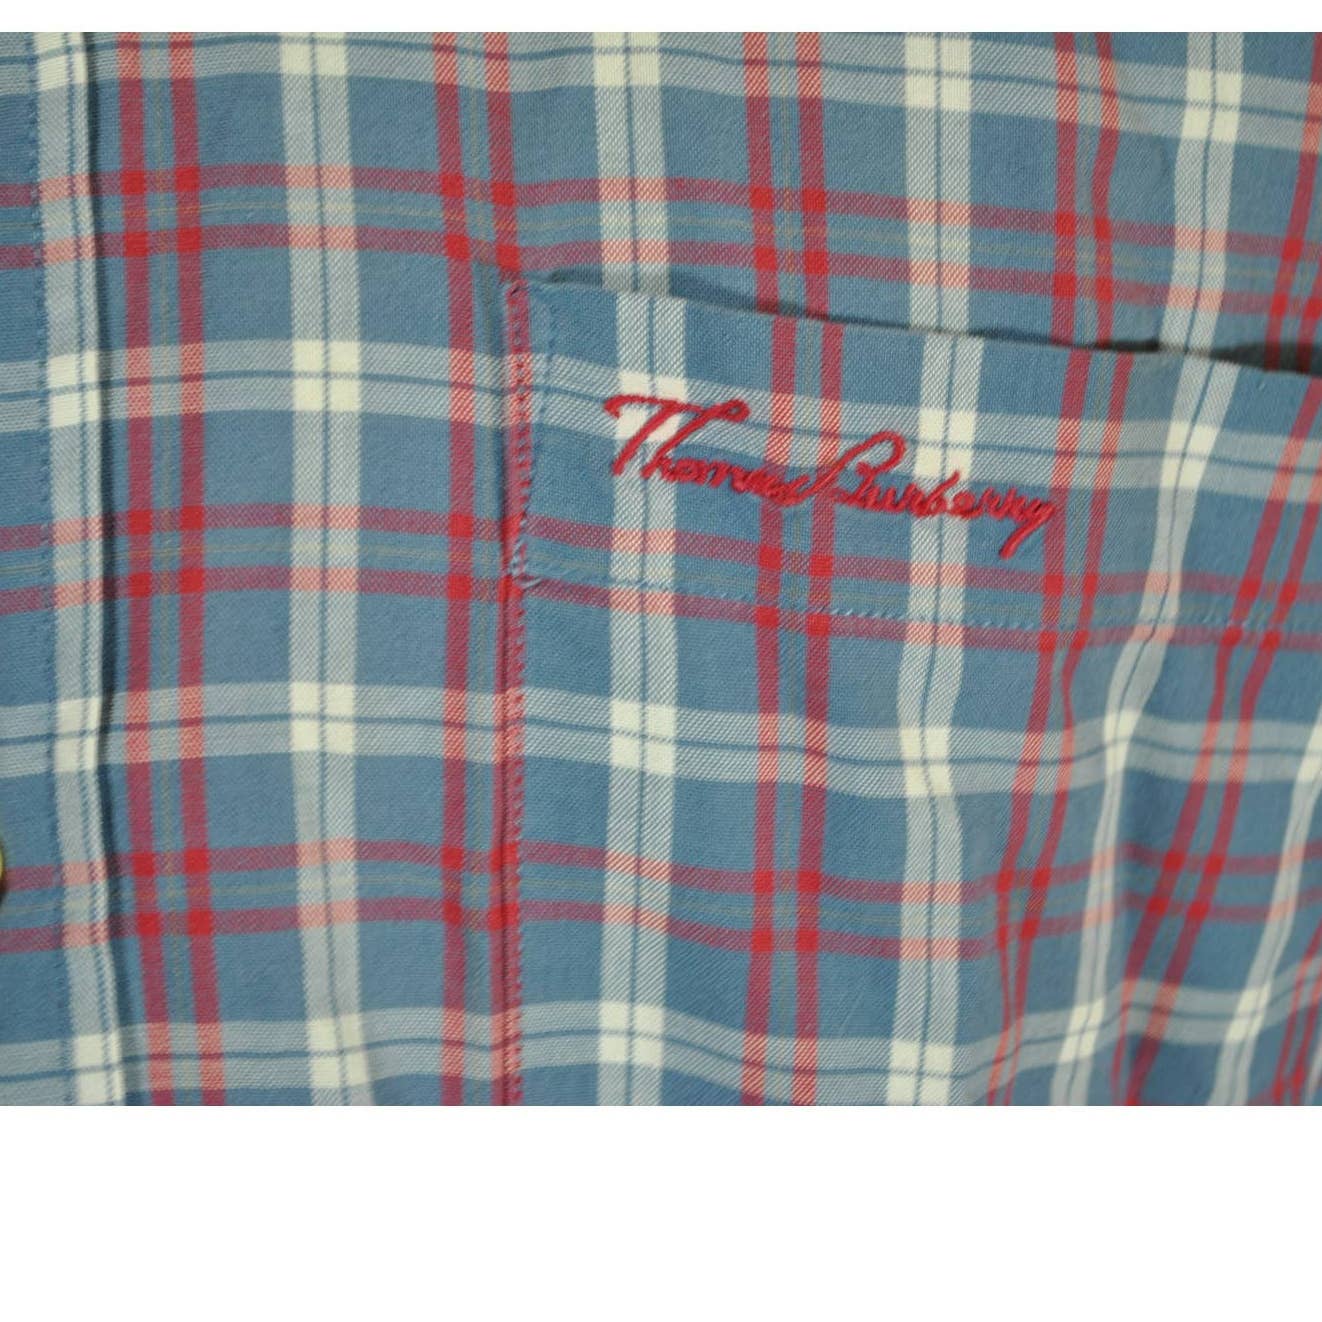 Vintage Thomas Burberry Plaid Red Gray Button Up Shirt - M